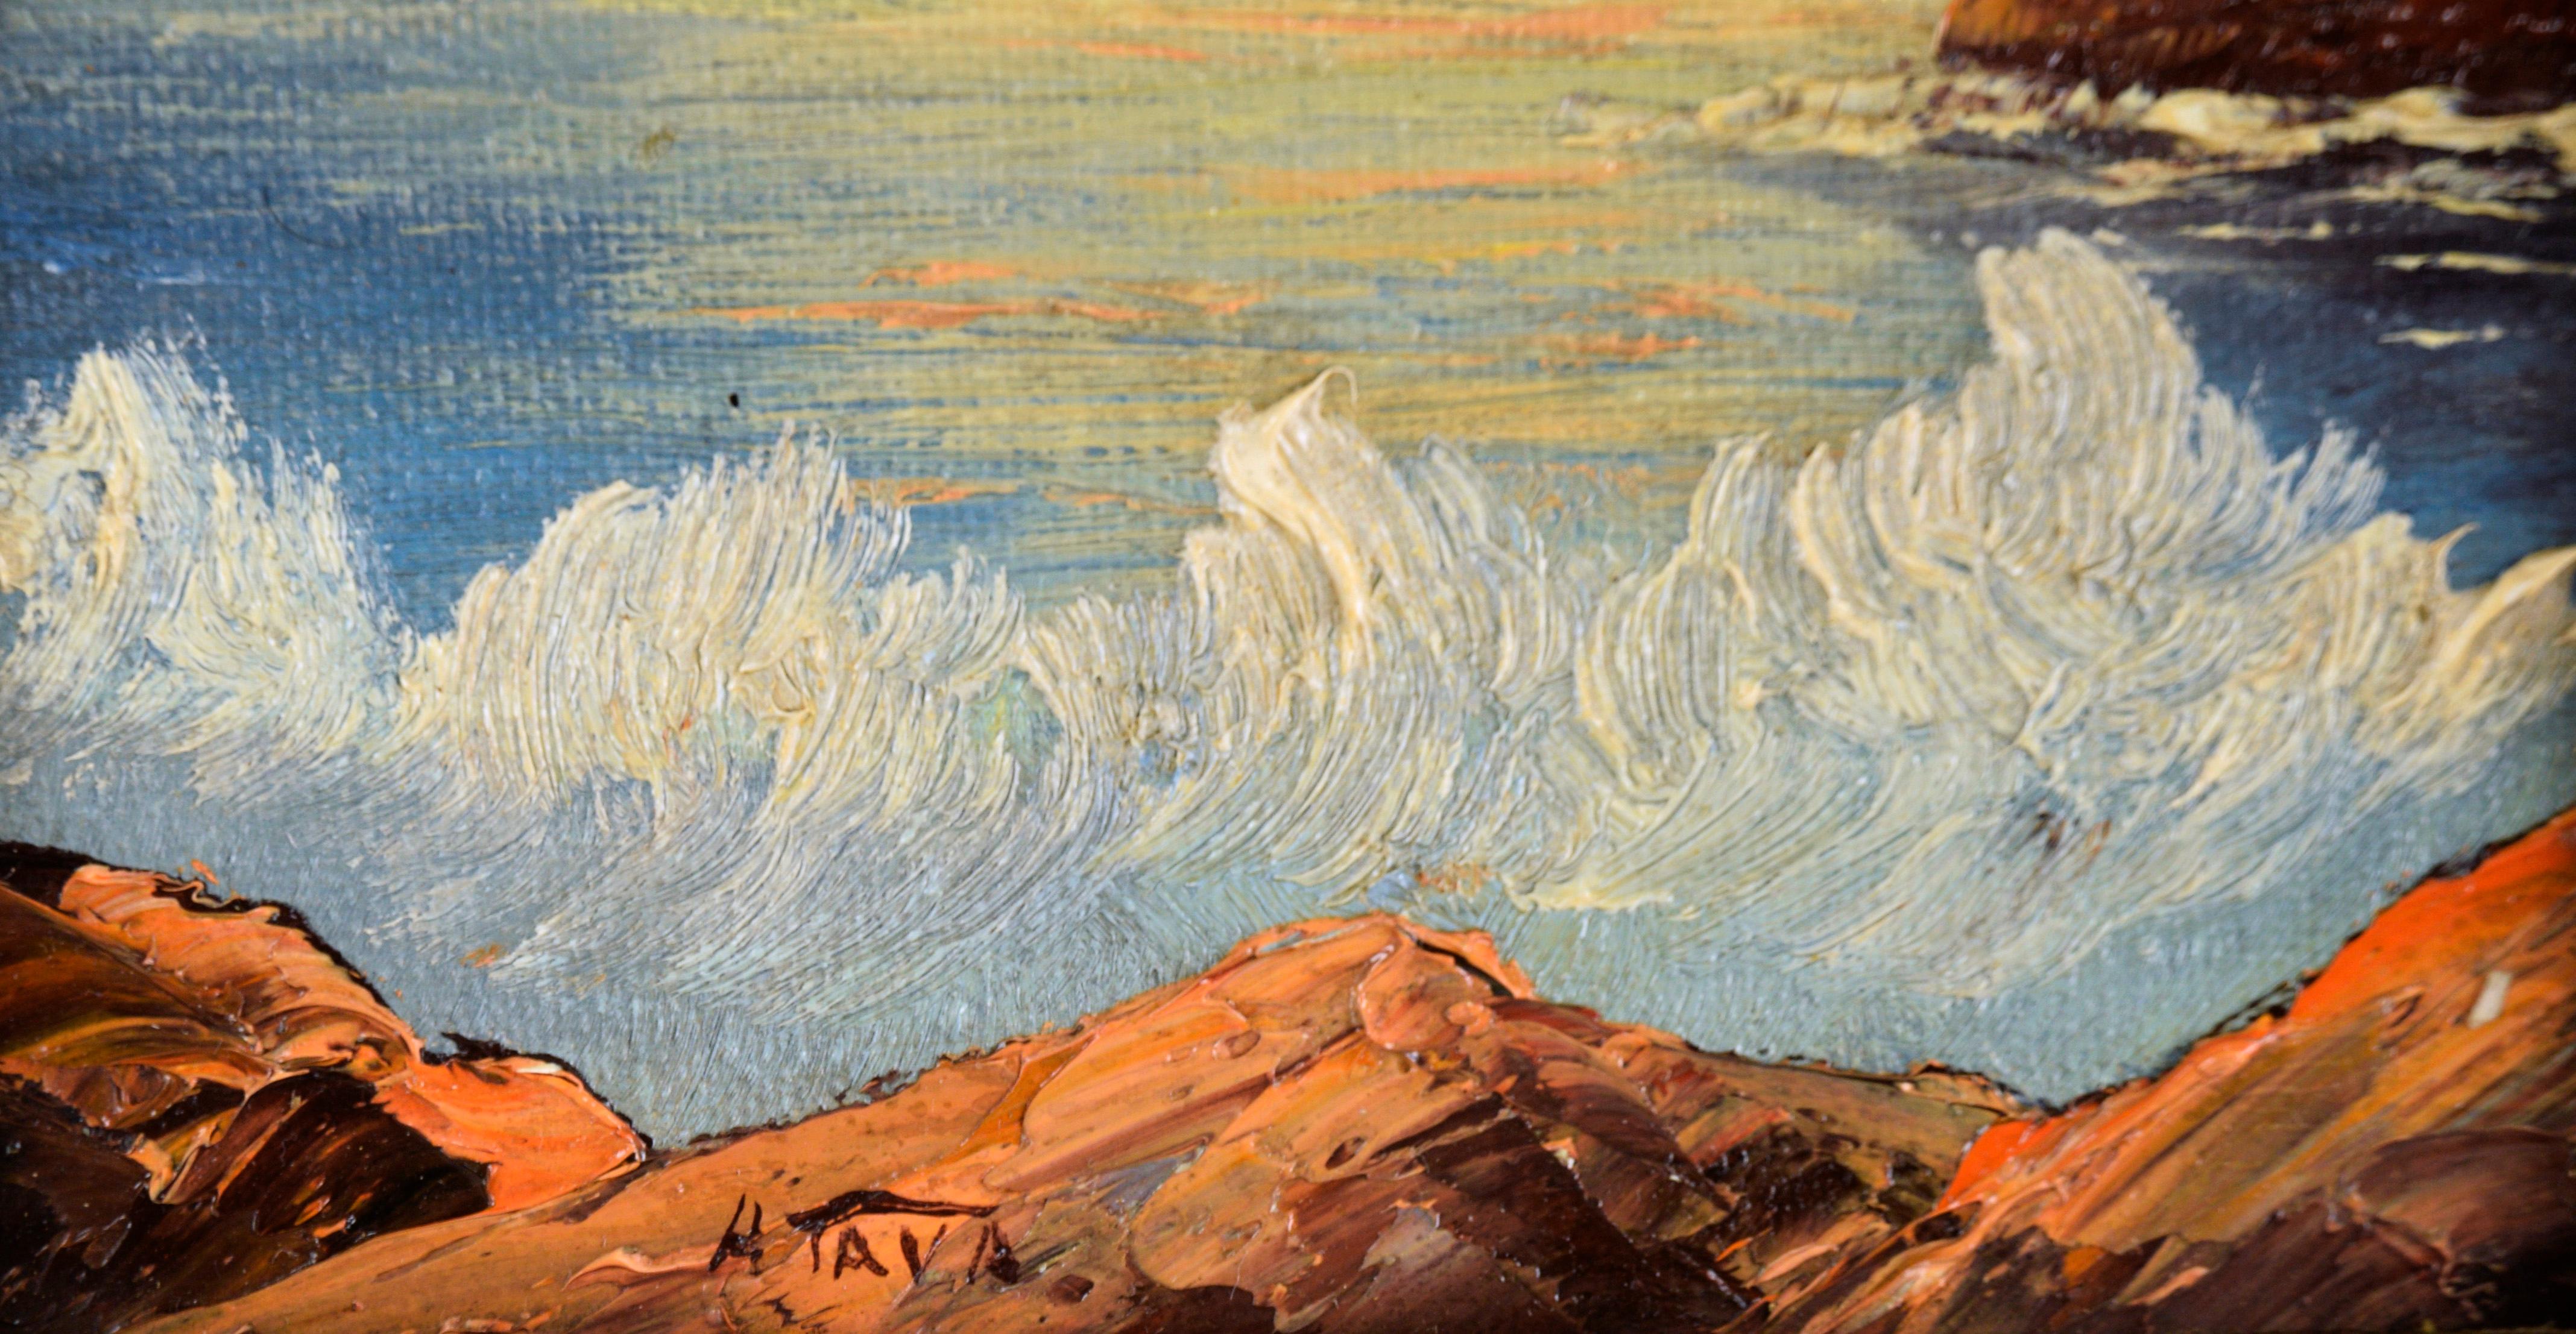 Ocean Splash at Sunset - Small Plein Air Oil Painting on Canvas 4